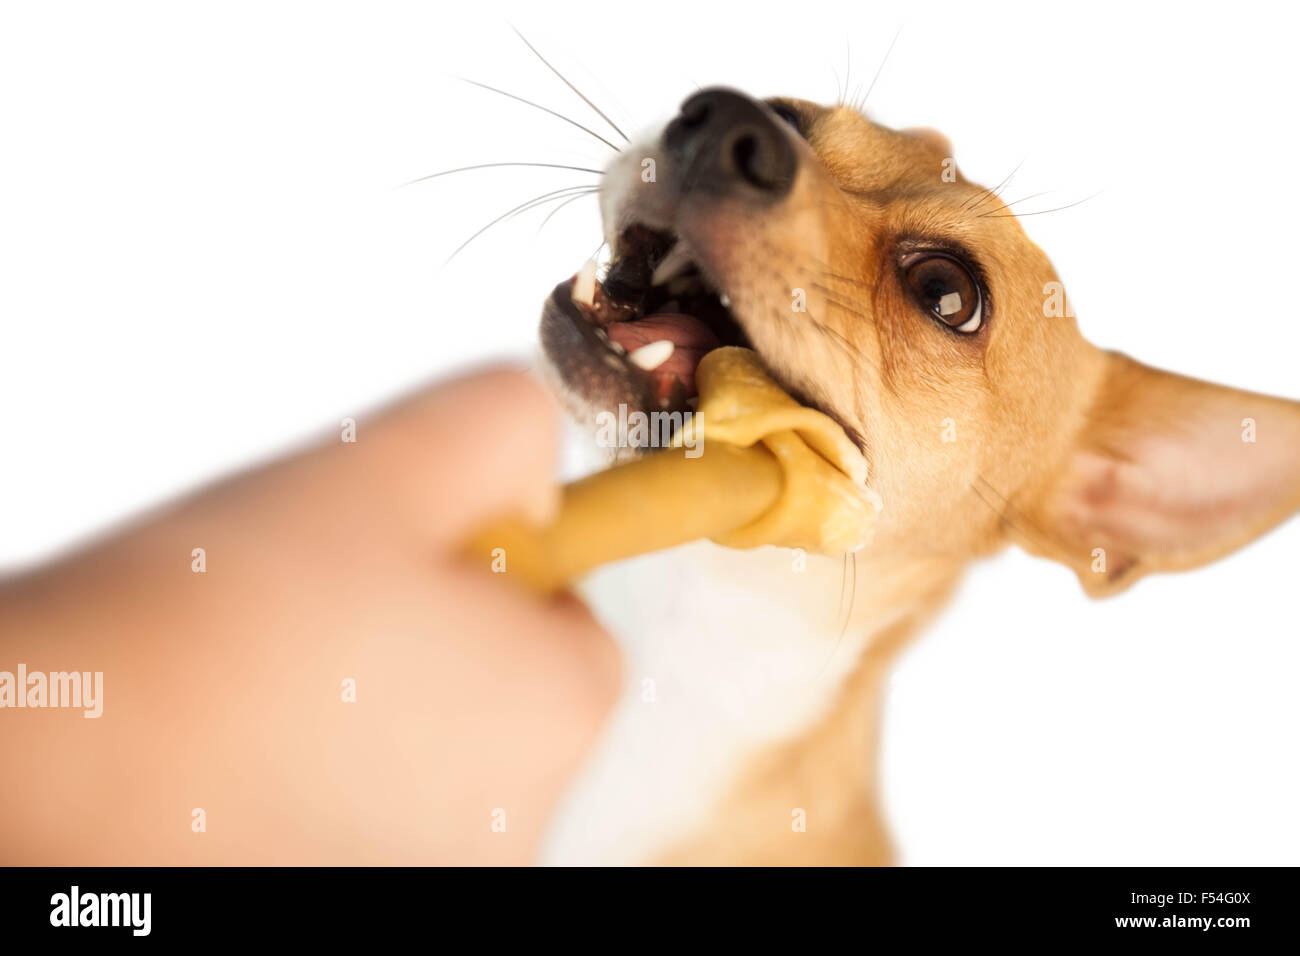 Cute dog chewing bone Stock Photo